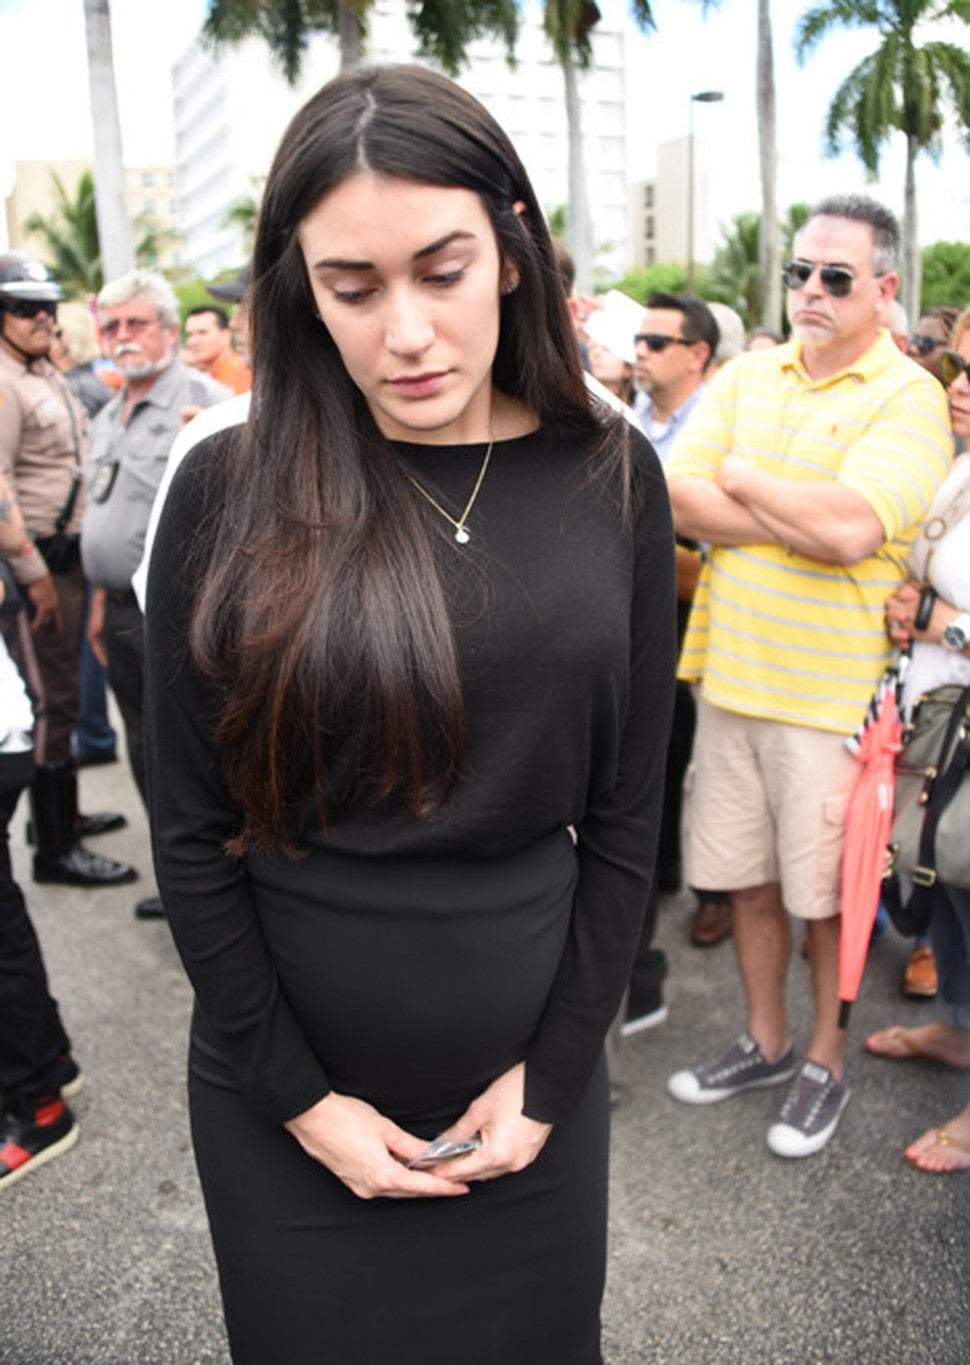 Jose Fernandez's Pregnant Girlfriend Maria Arias Attends Memorial